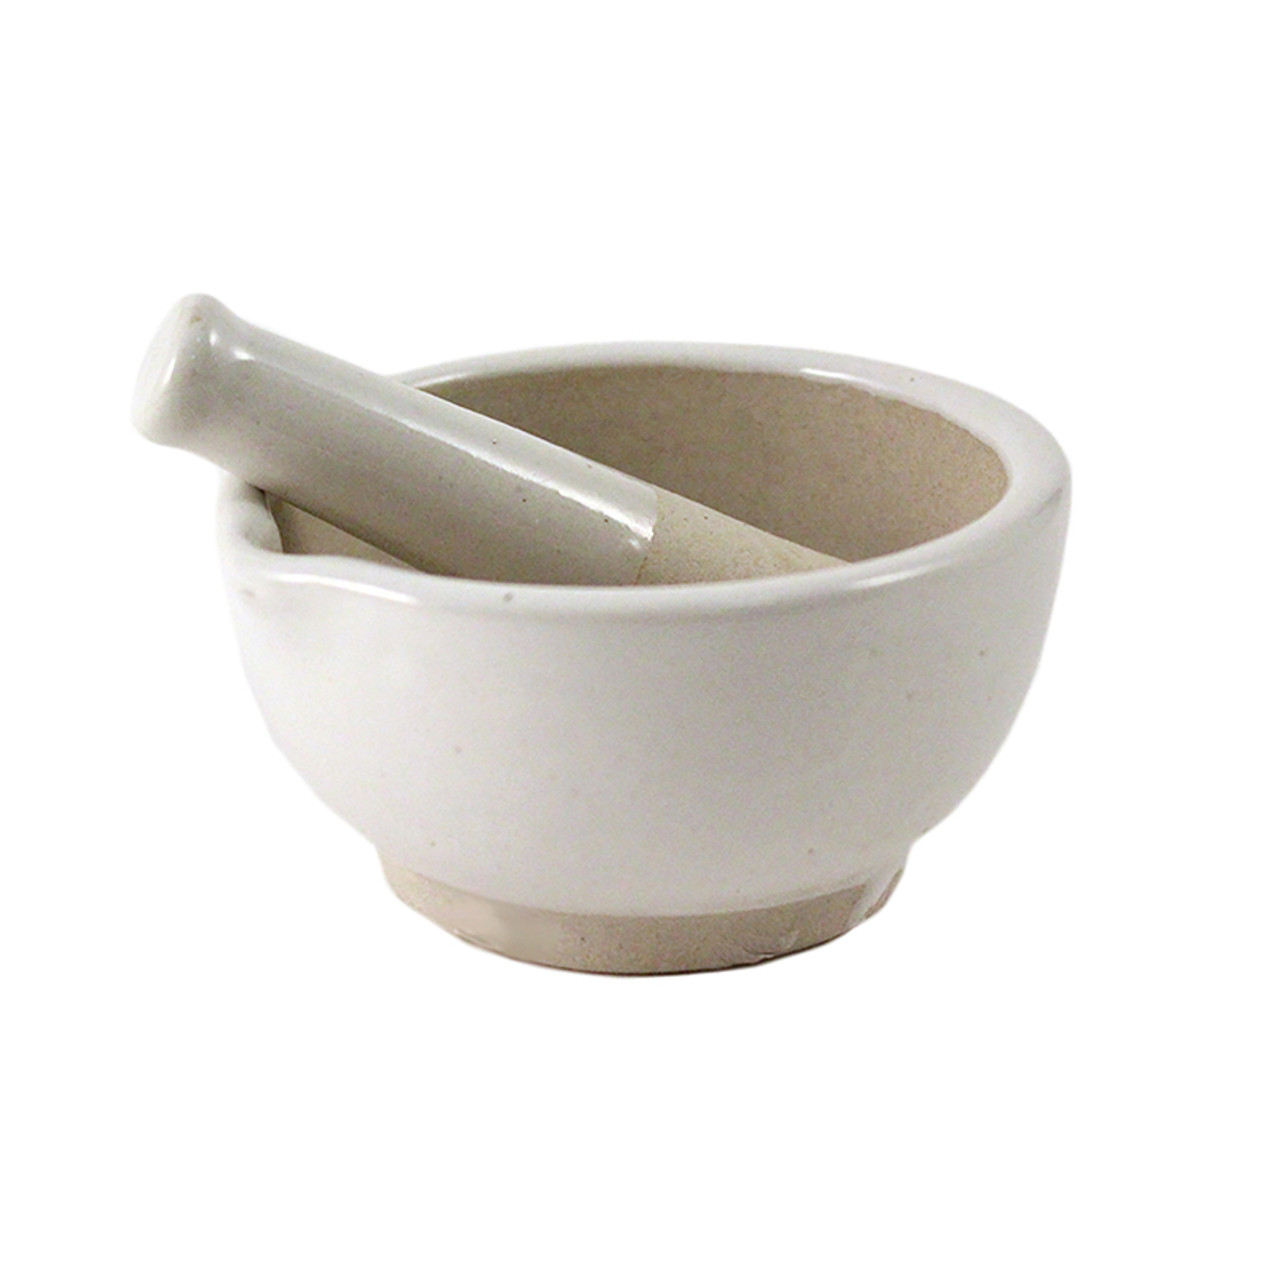 Porcelain Mortar and Pestle Set, 11 oz – Medical Products Supplies